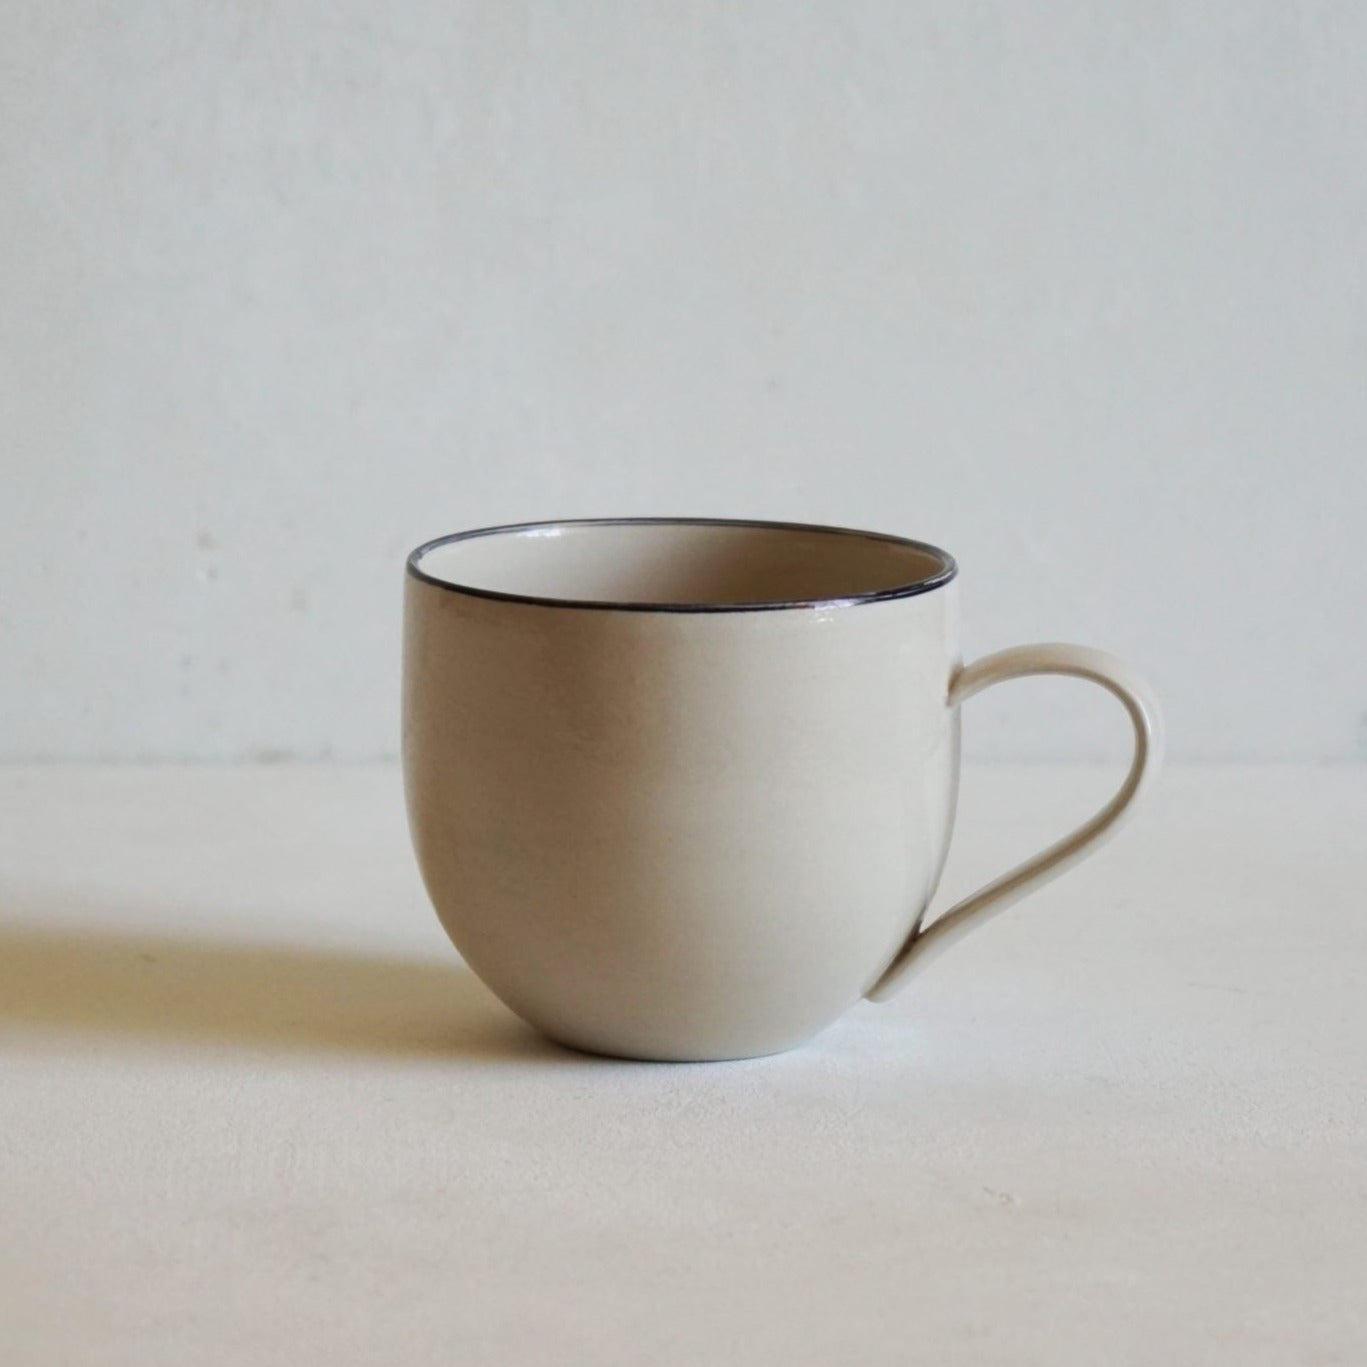 Simple Mug with a Black Rim